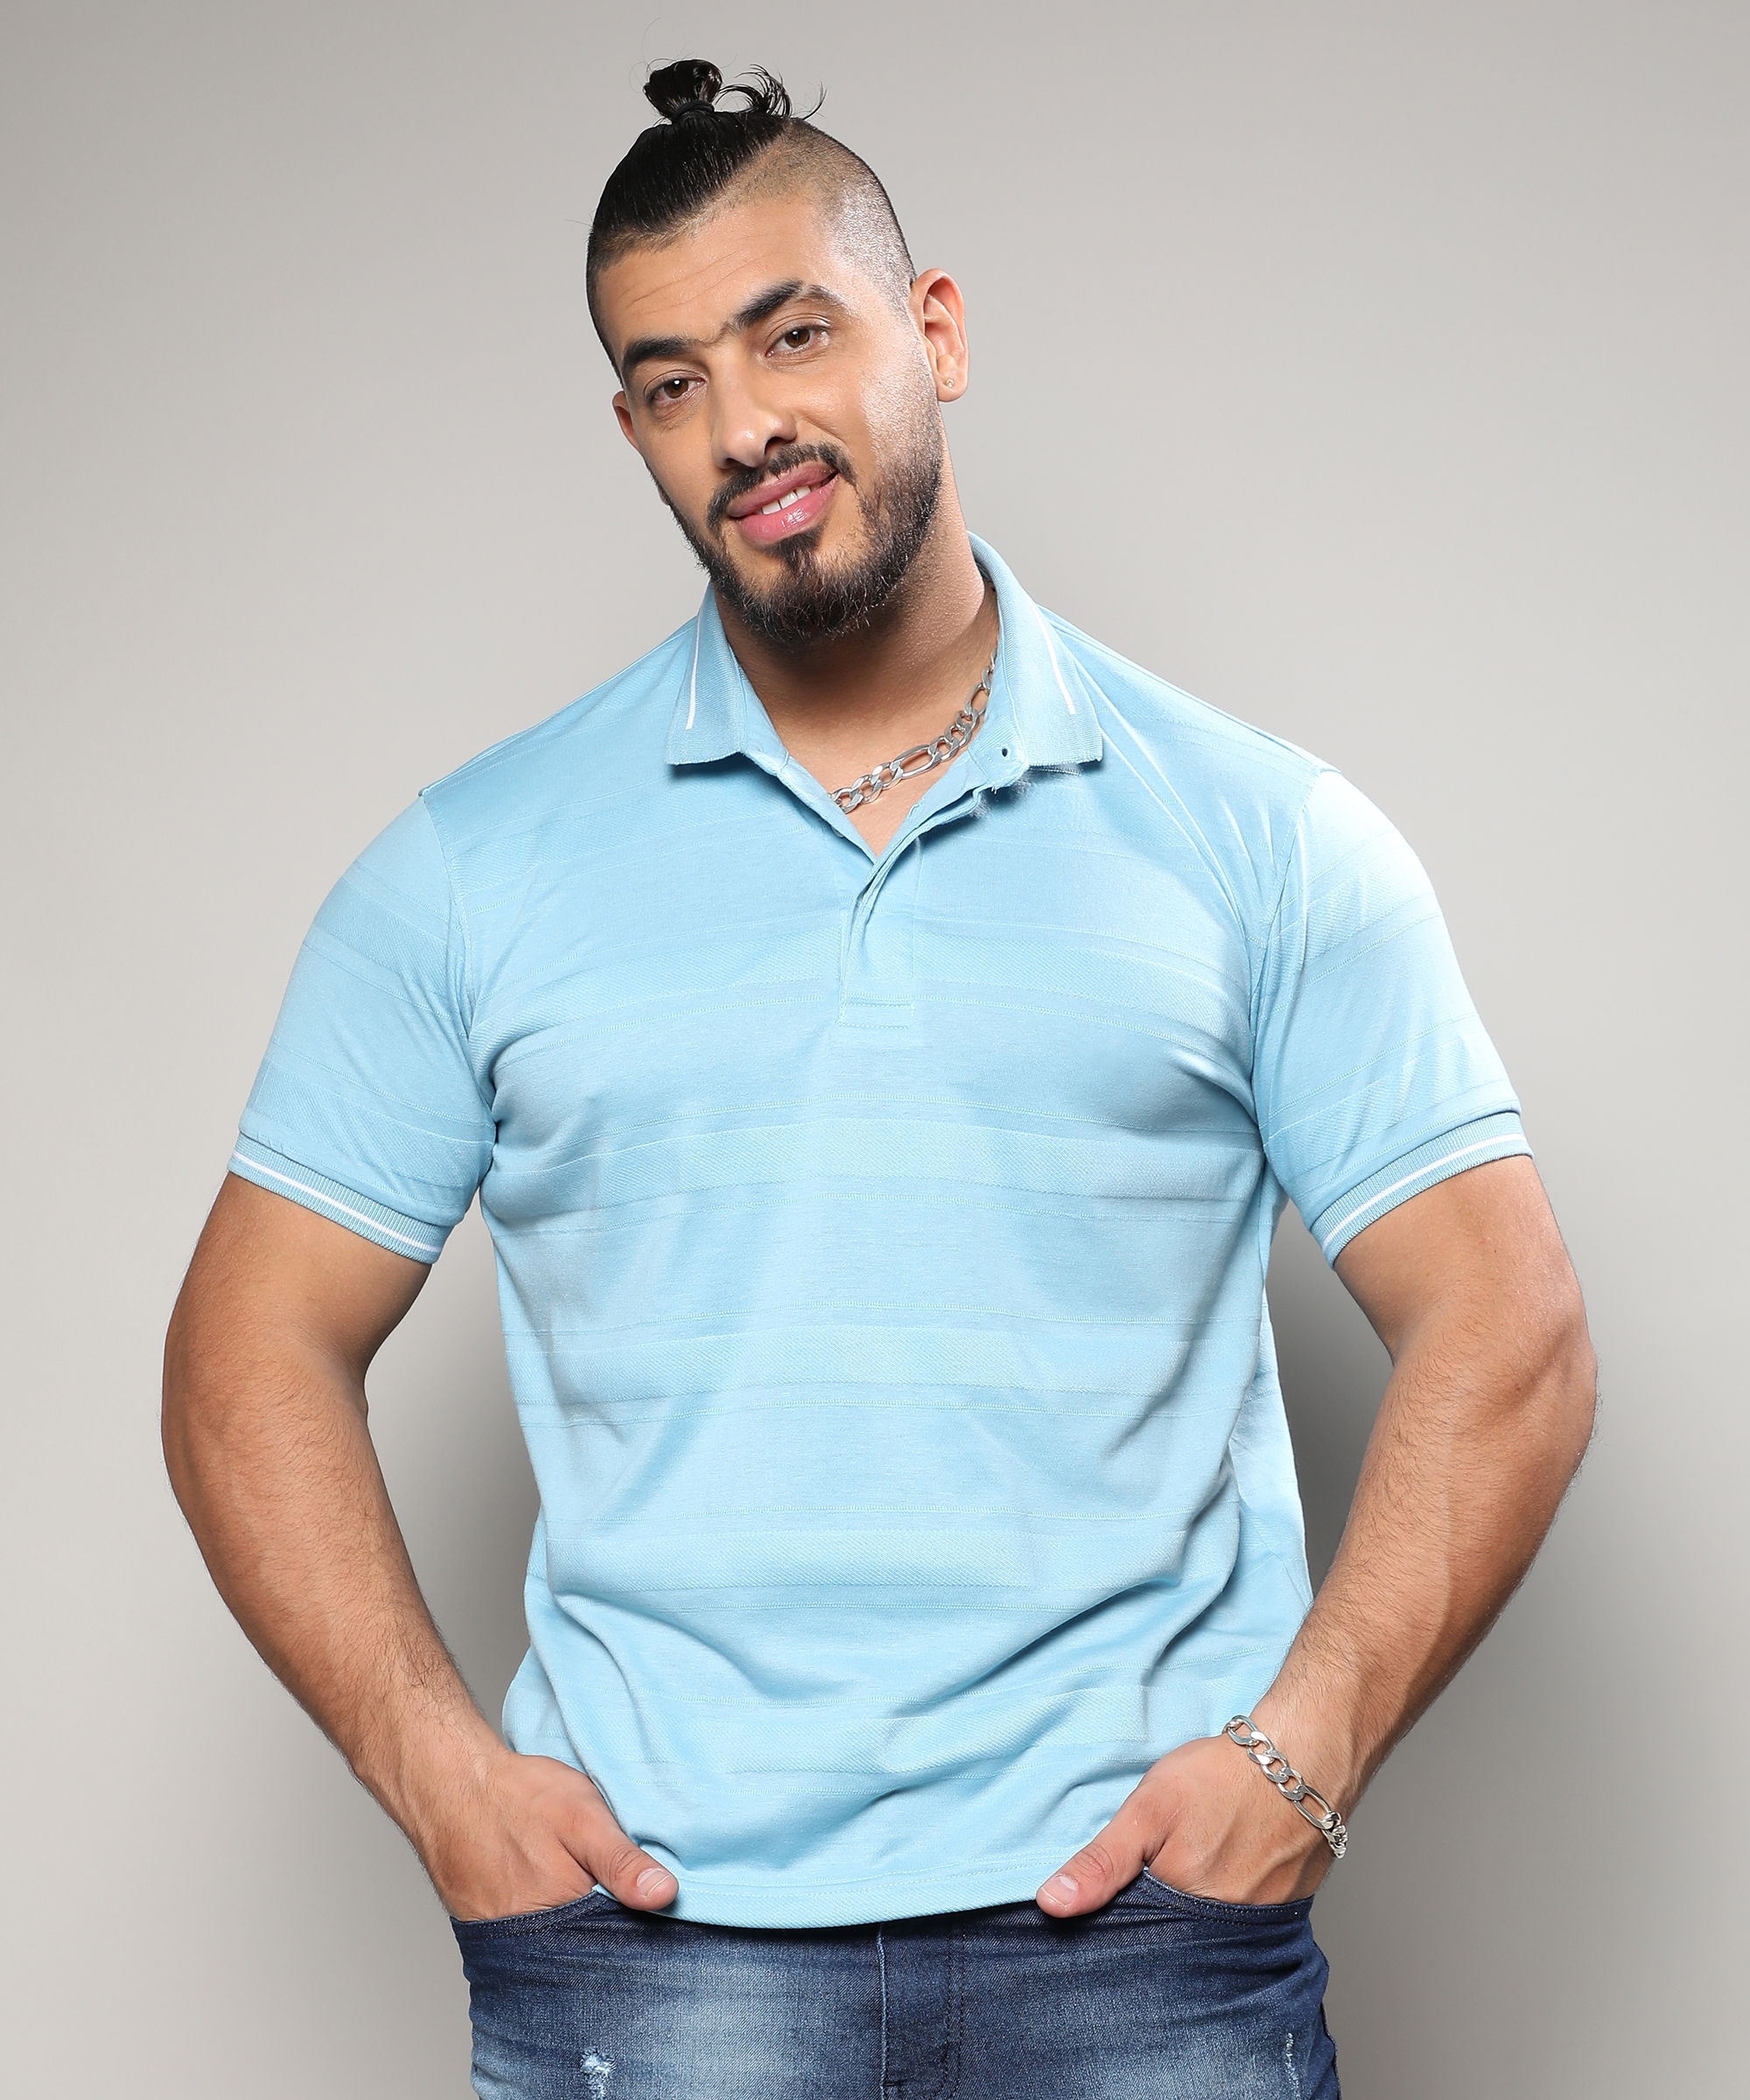 Instafab Plus | Men's Sky Blue Self-Design Horizontal Striped T-Shirt